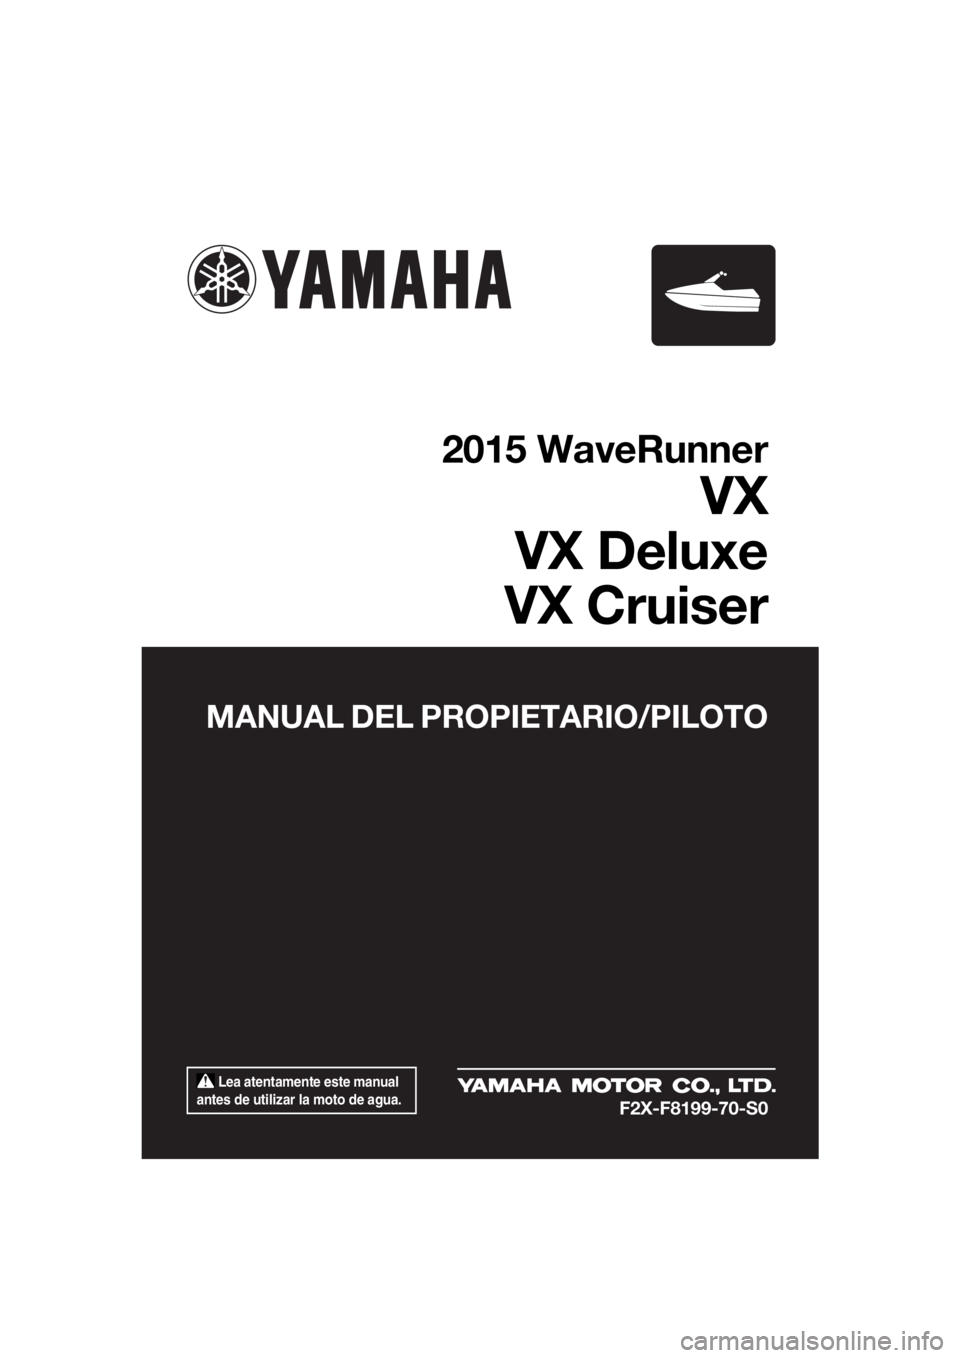 YAMAHA VX CRUISER 2015  Manuale de Empleo (in Spanish)  Lea atentamente este manual 
antes de utilizar la moto de agua.
MANUAL DEL PROPIETARIO/PILOTO
2015 WaveRunner
VX
VX Deluxe
VX Cruiser
F2X-F8199-70-S0
UF2X70S0.book  Page 1  Wednesday, September 17, 2